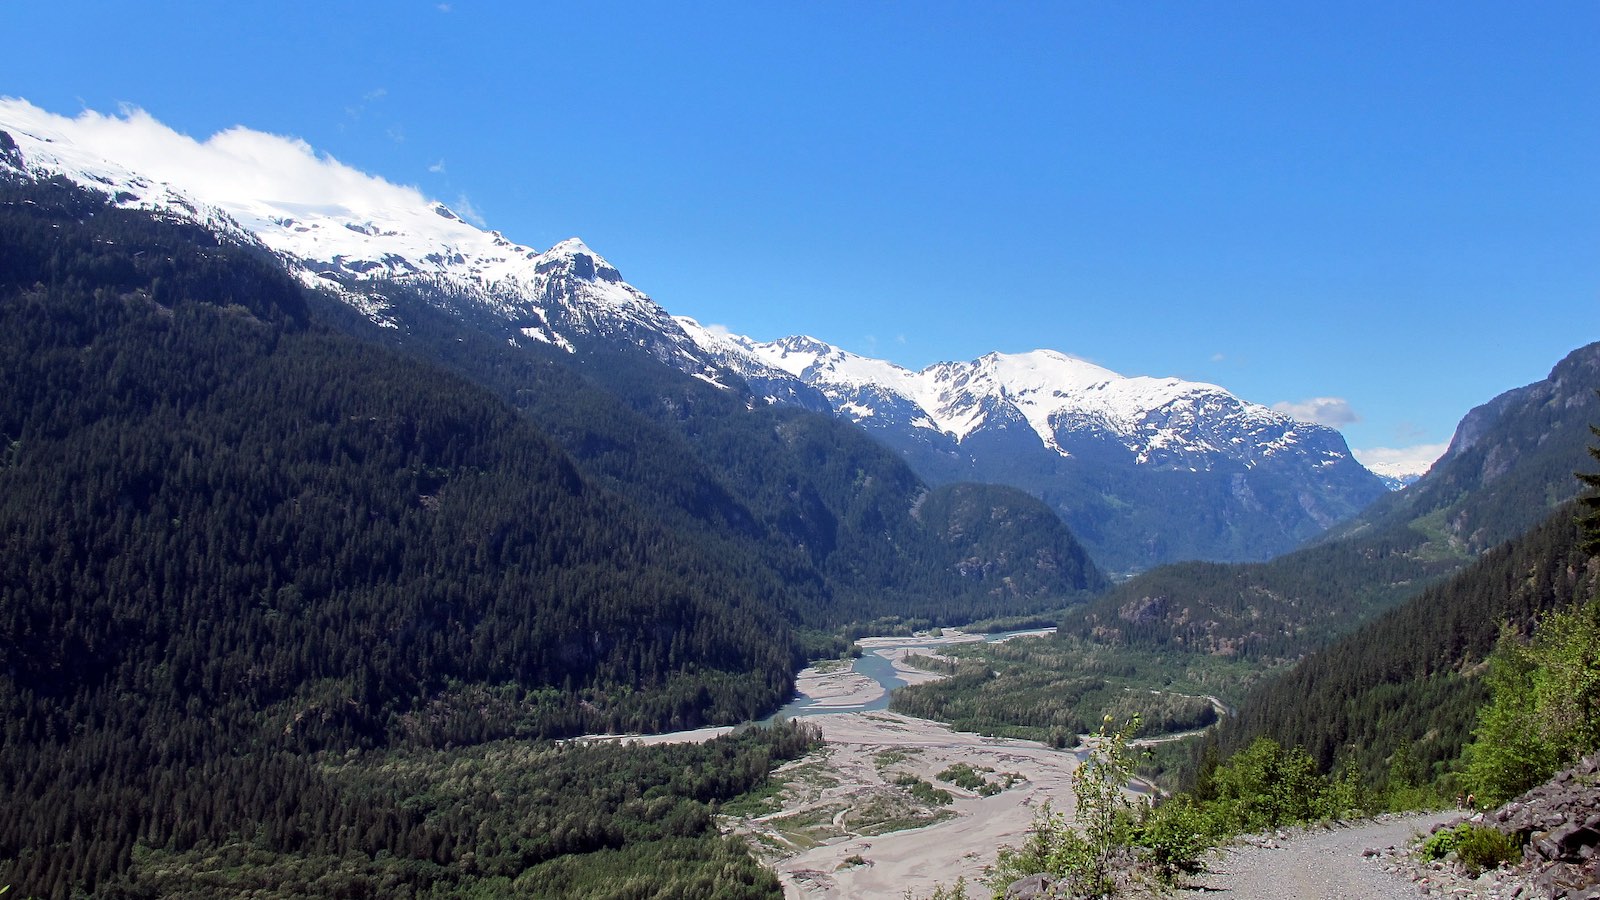  Río Squamish, Columbia Británica 